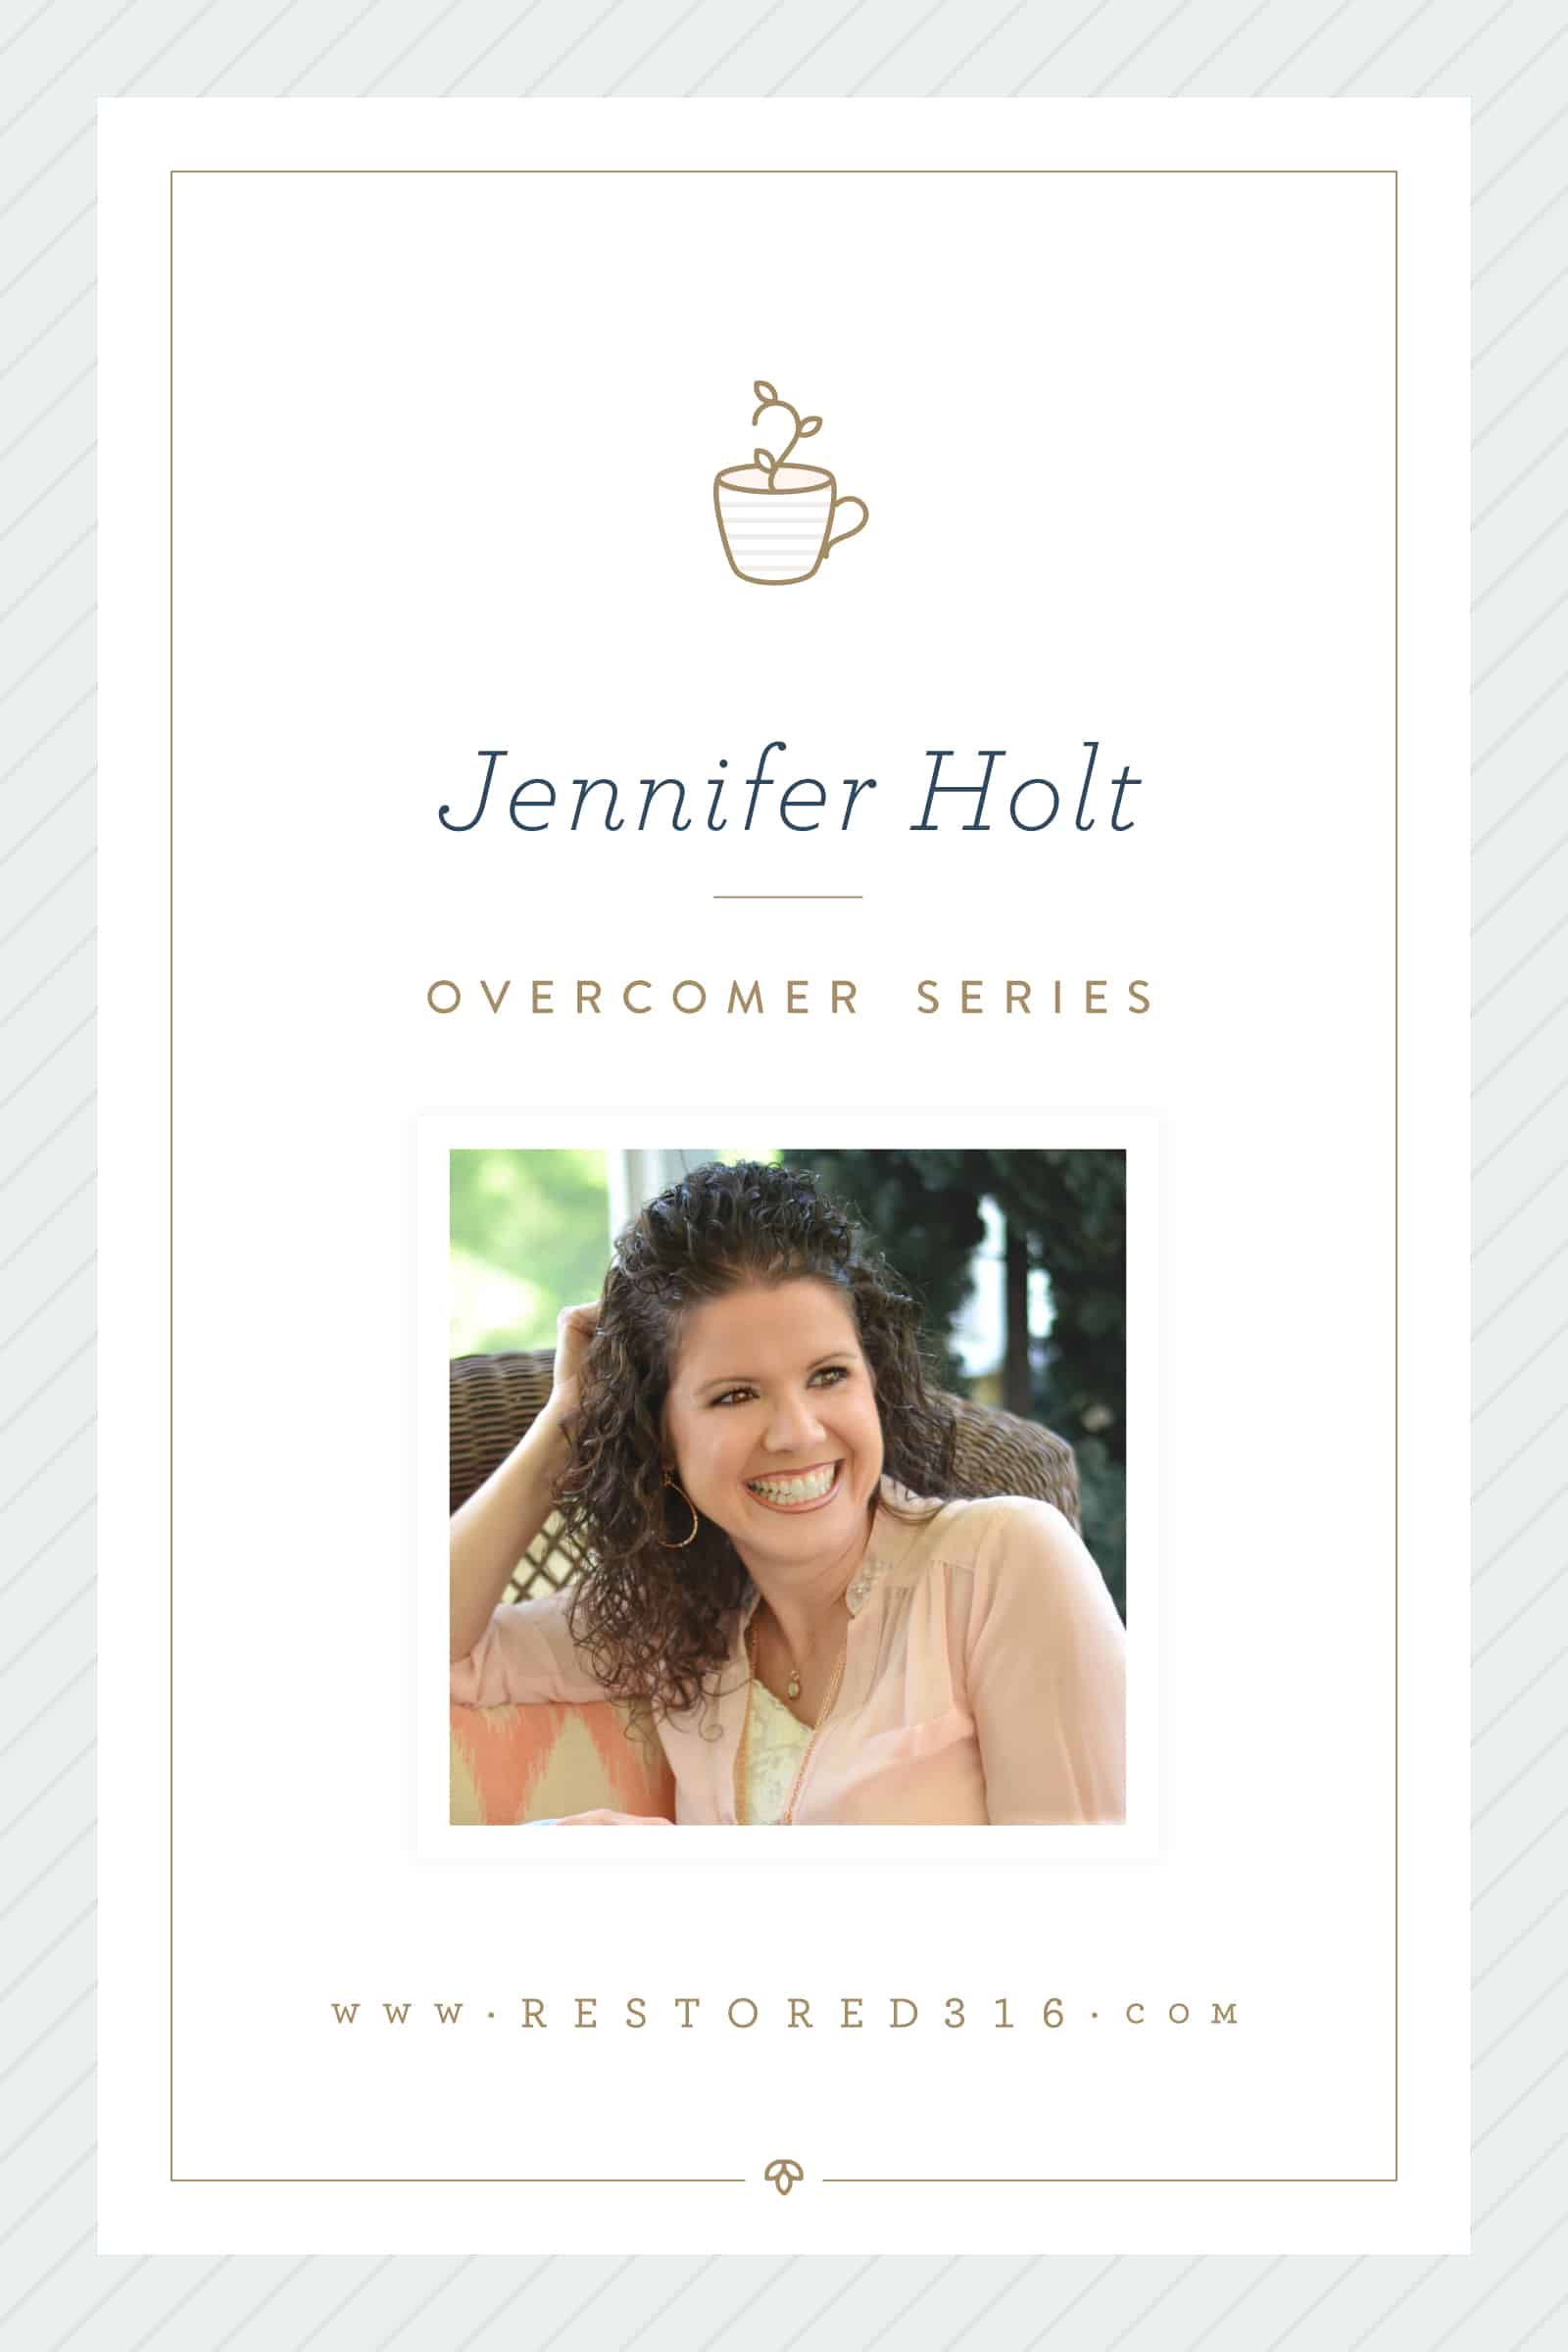 Overcomer Series with Jennifer Holt